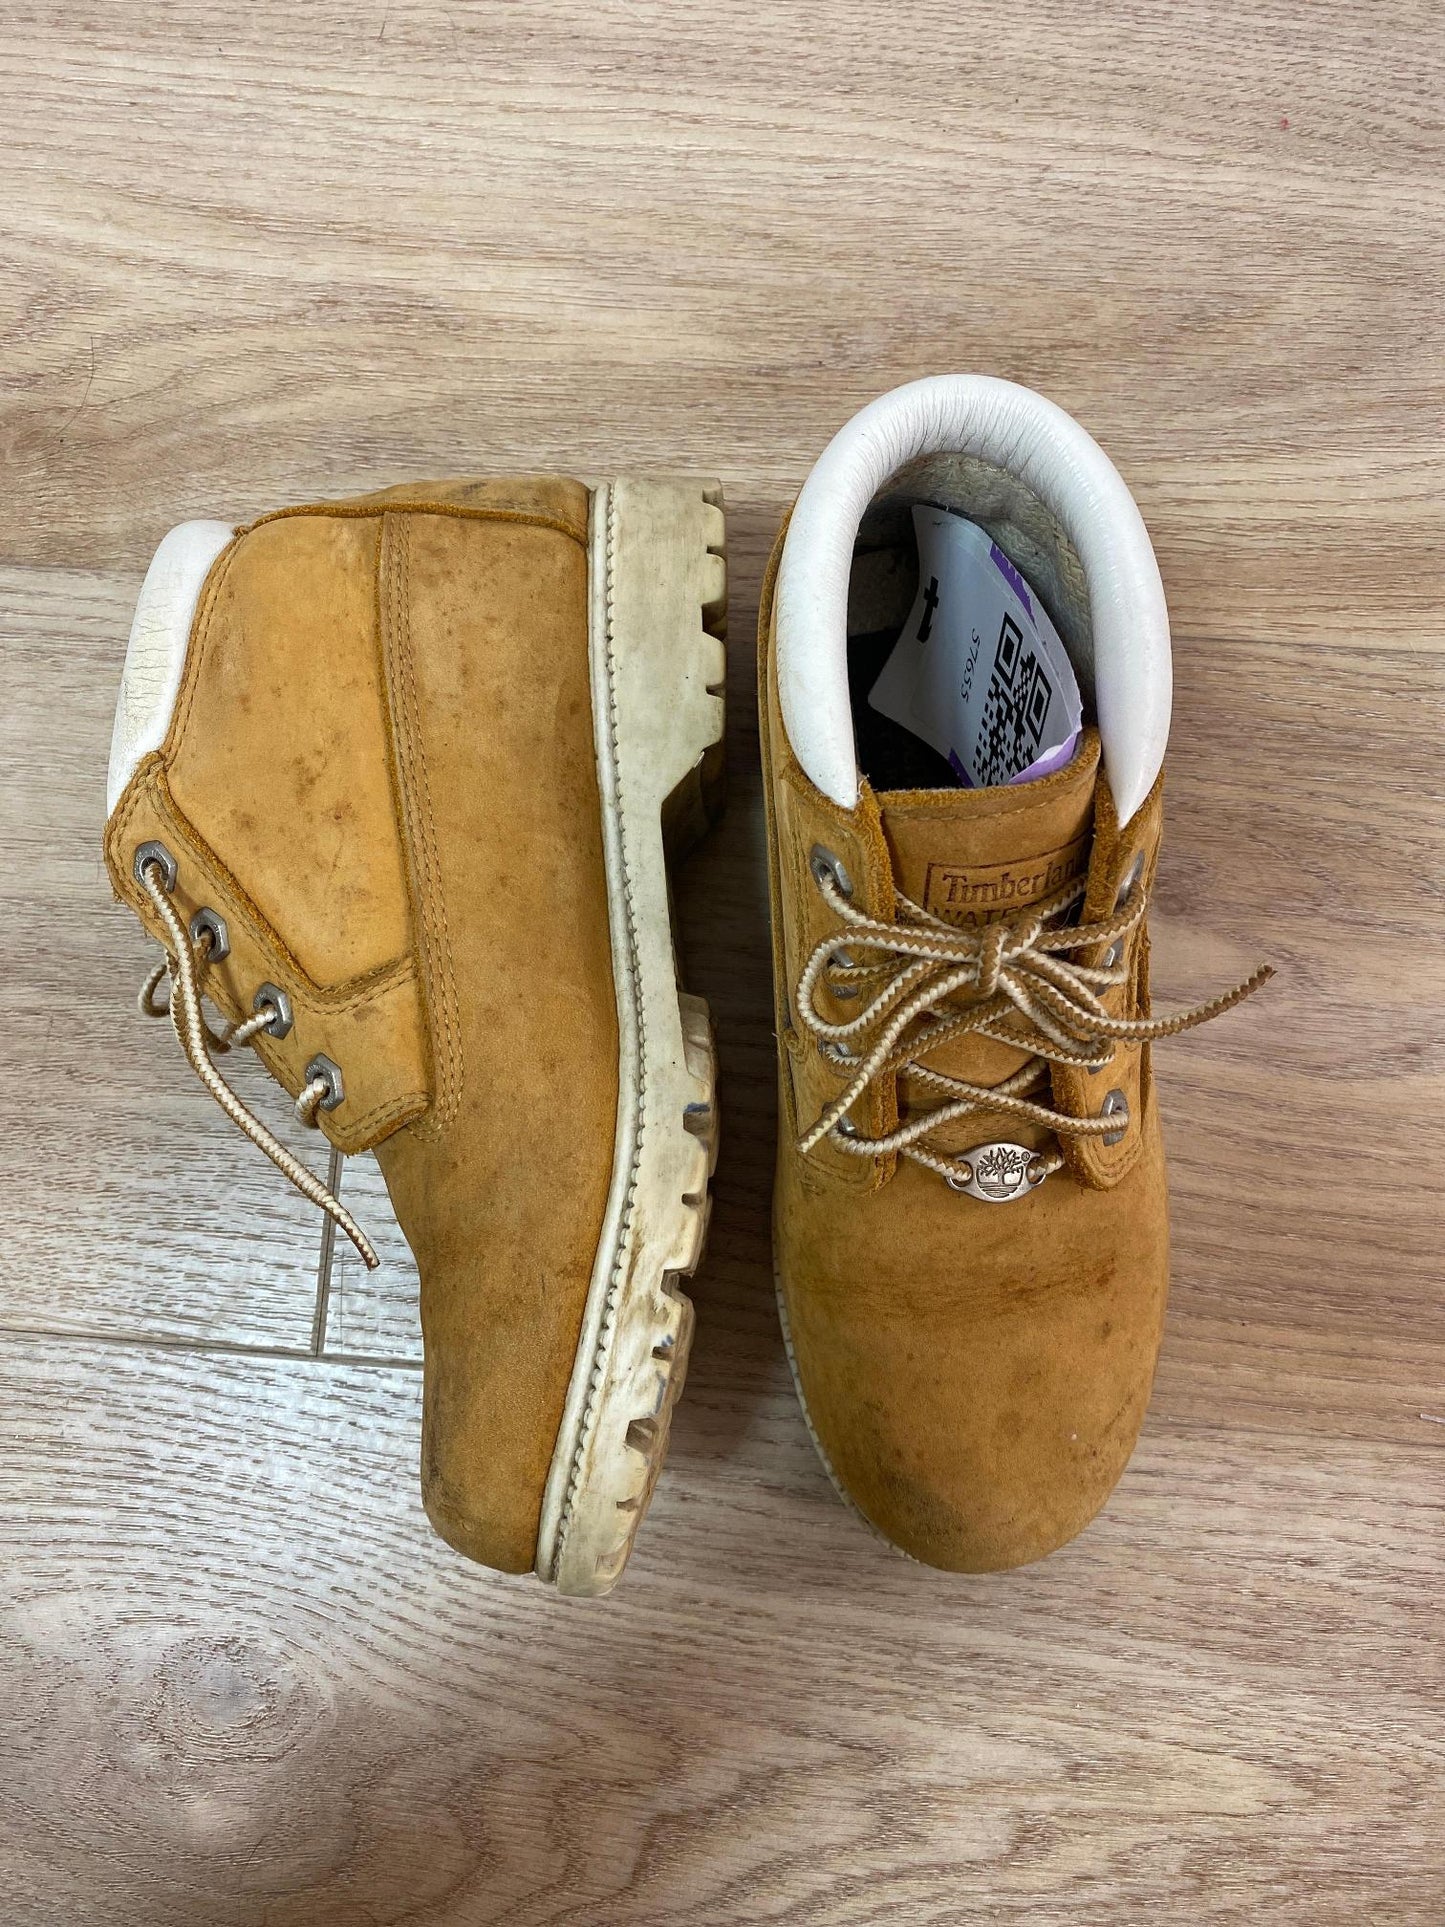 Timberland boots, size 5.5